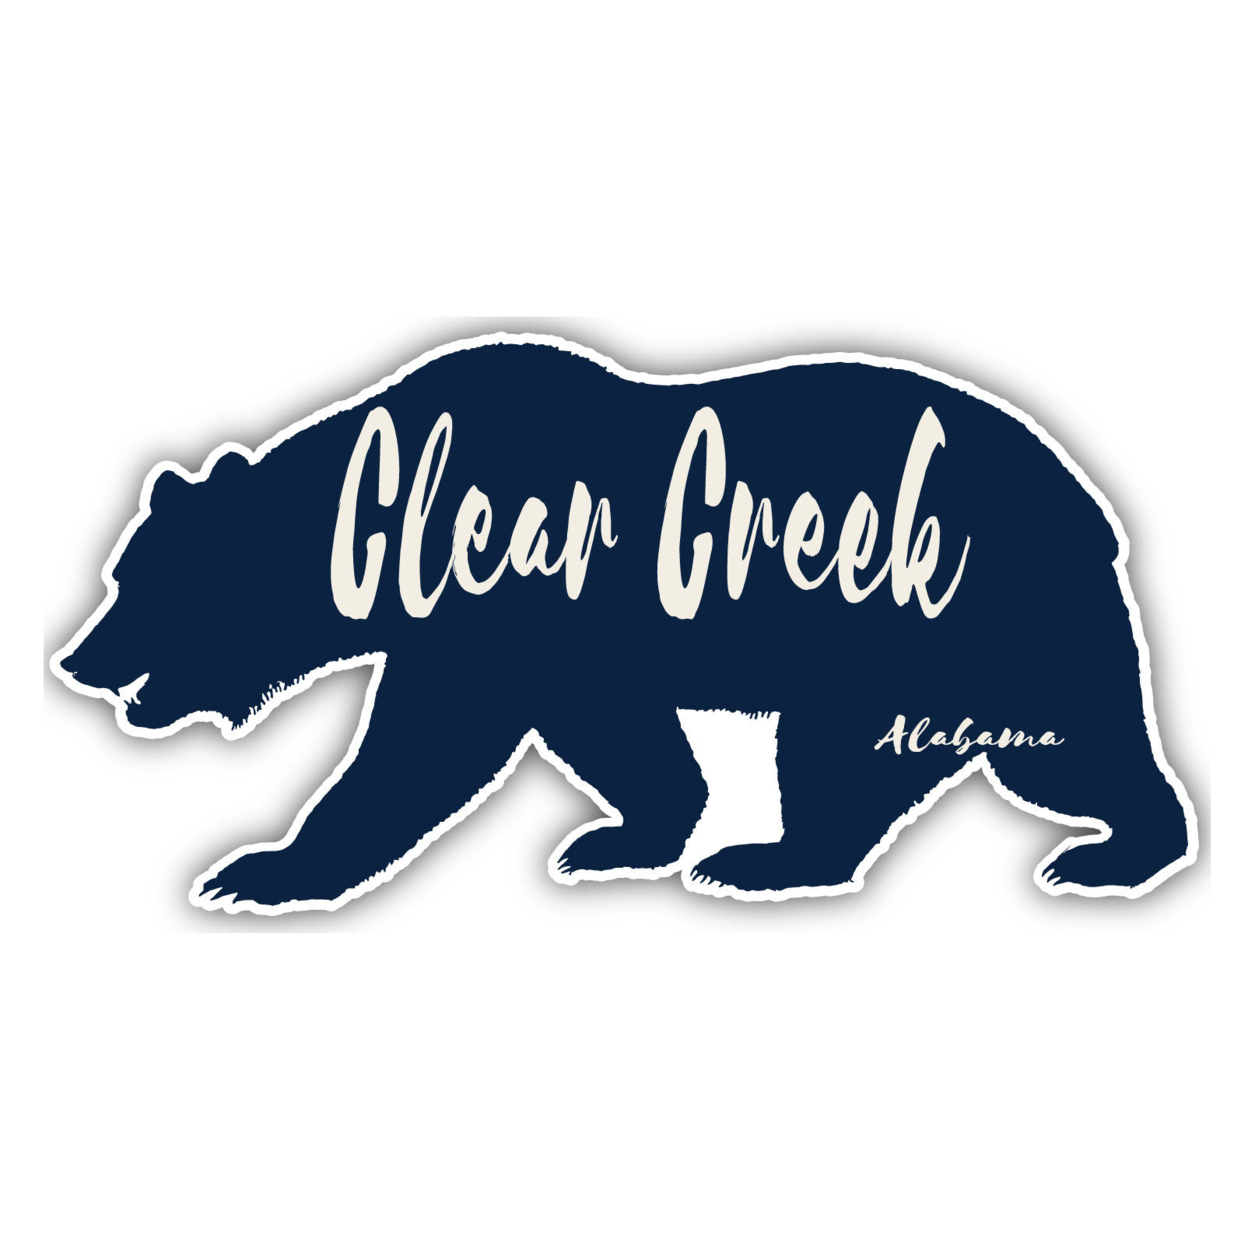 Clear Creek Alabama Souvenir Decorative Stickers (Choose Theme And Size) - Single Unit, 4-Inch, Tent